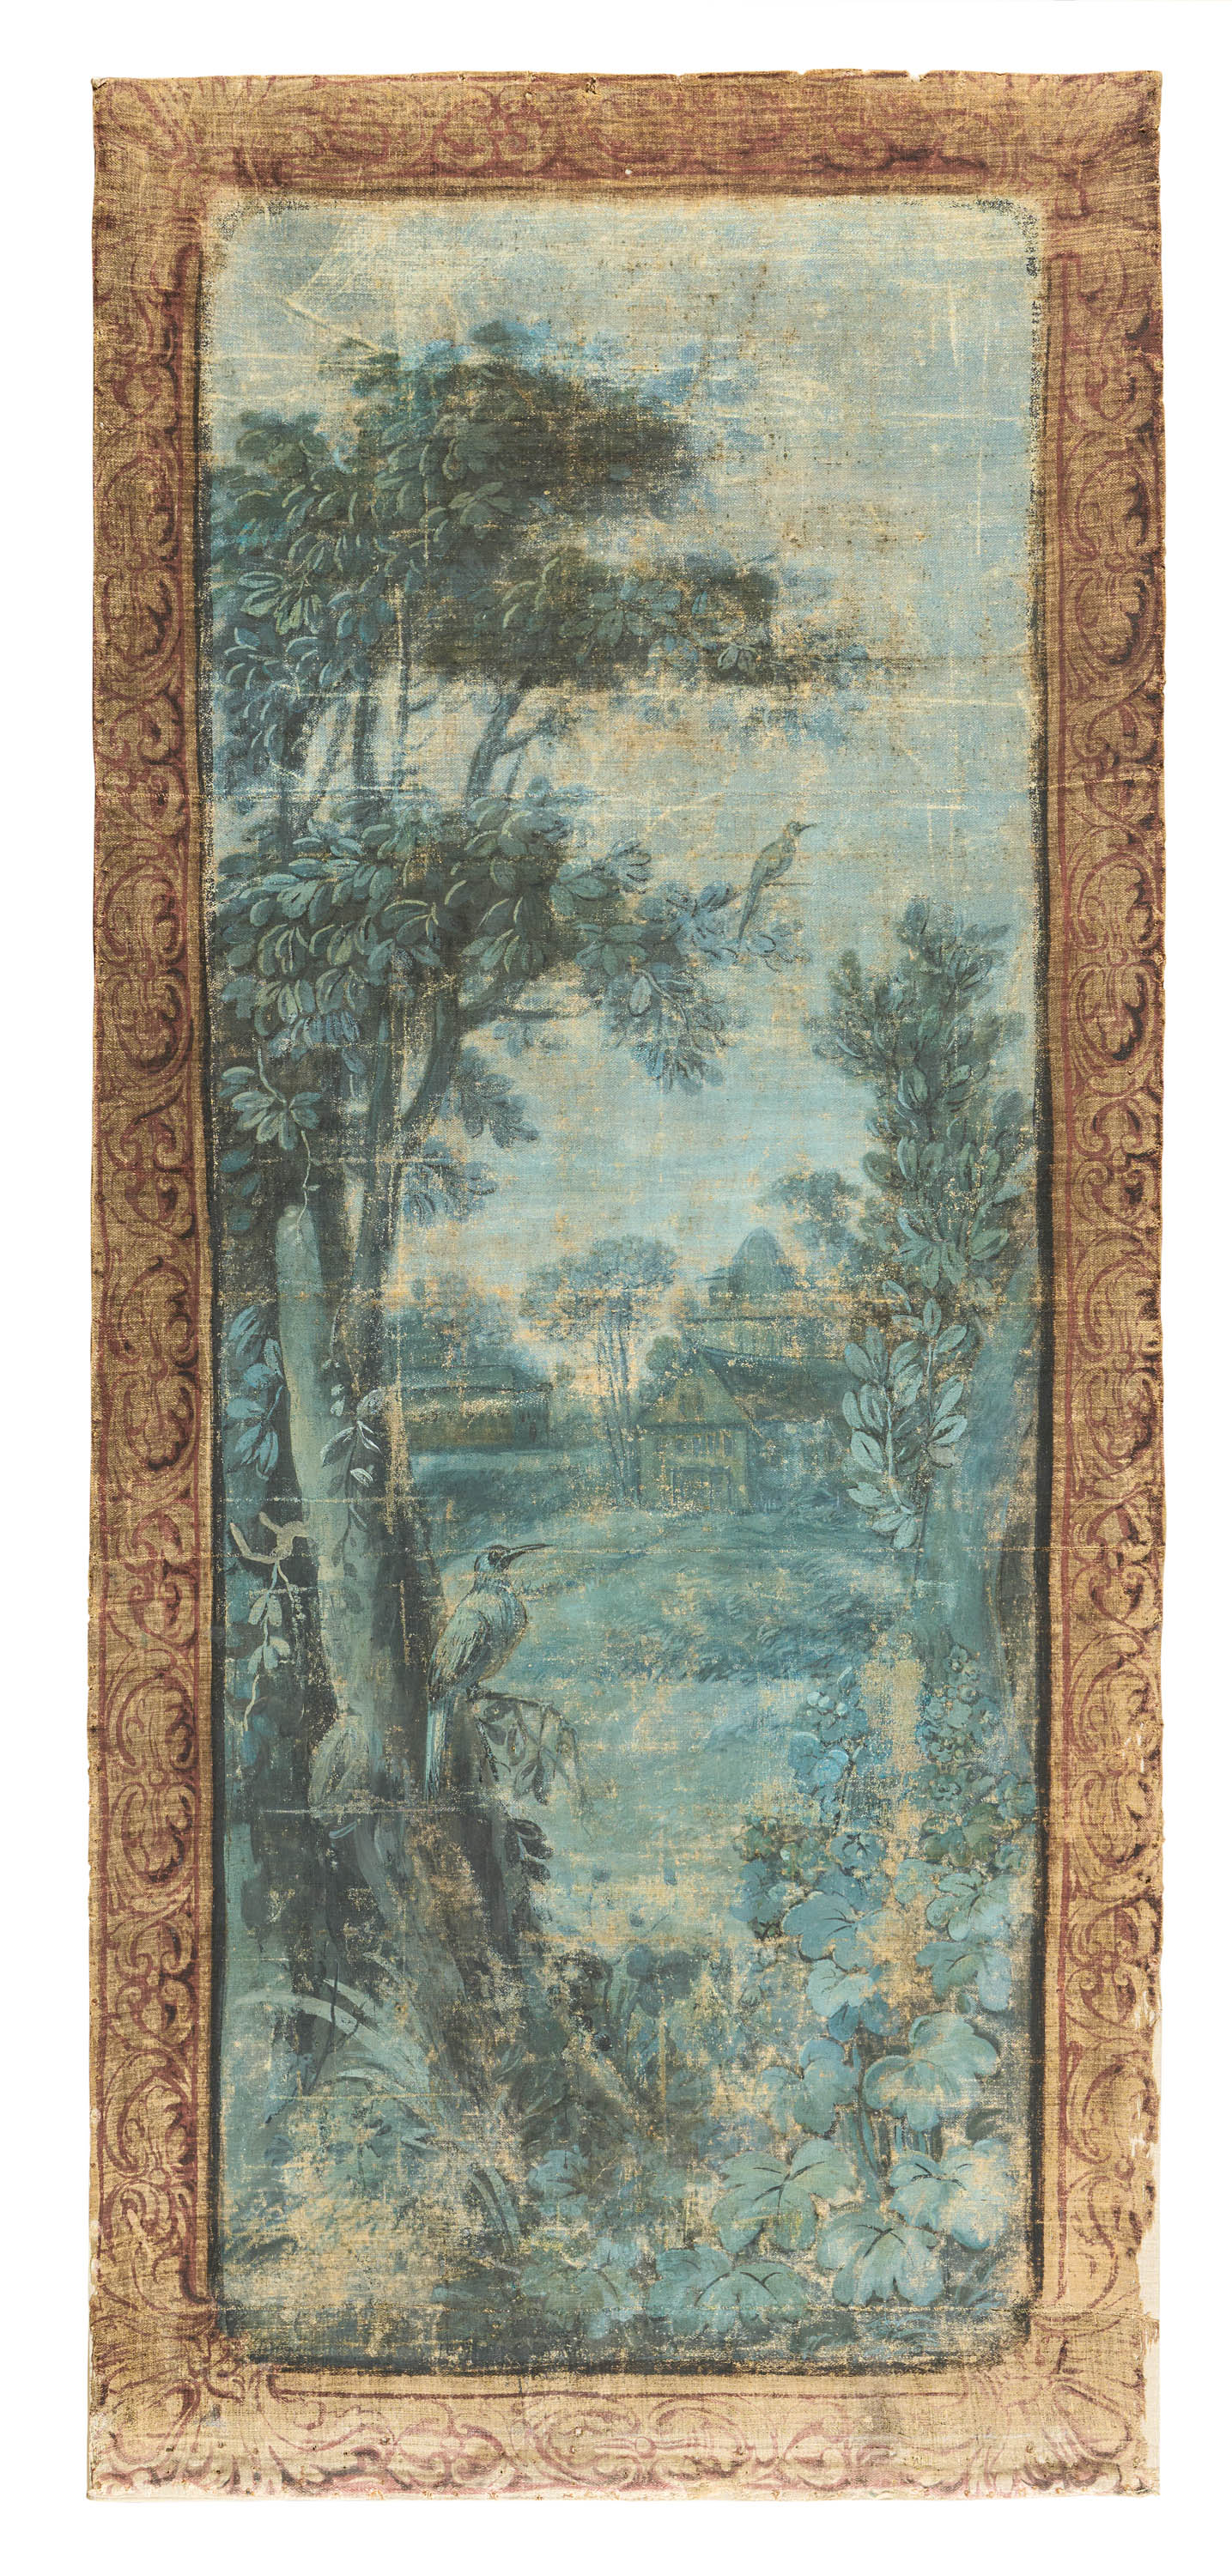 Set of three verdure tapestries with landscape vedutas - Image 5 of 6